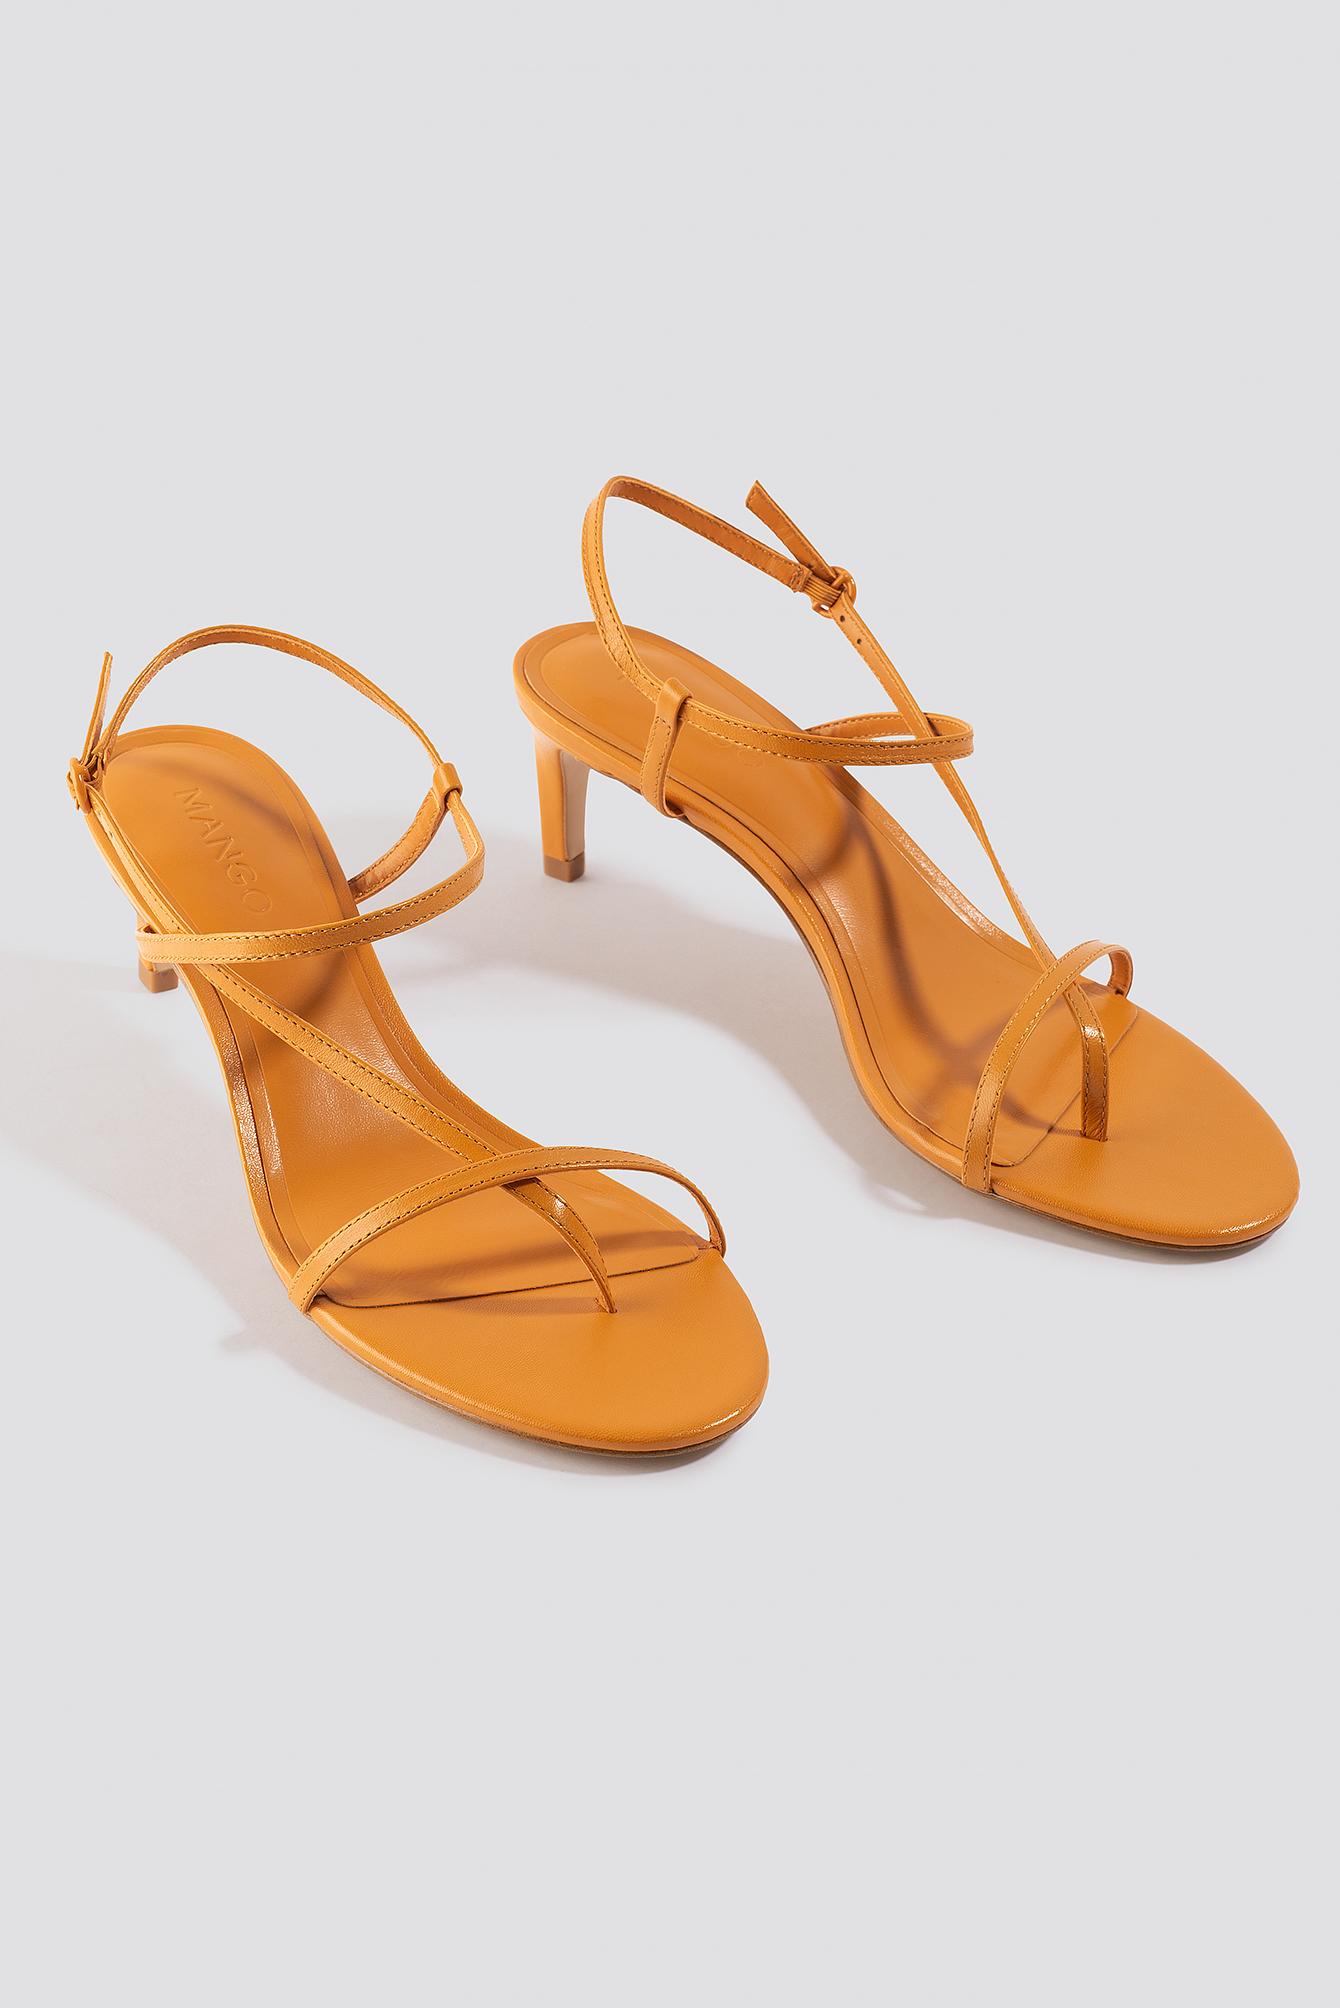 mango orange heels